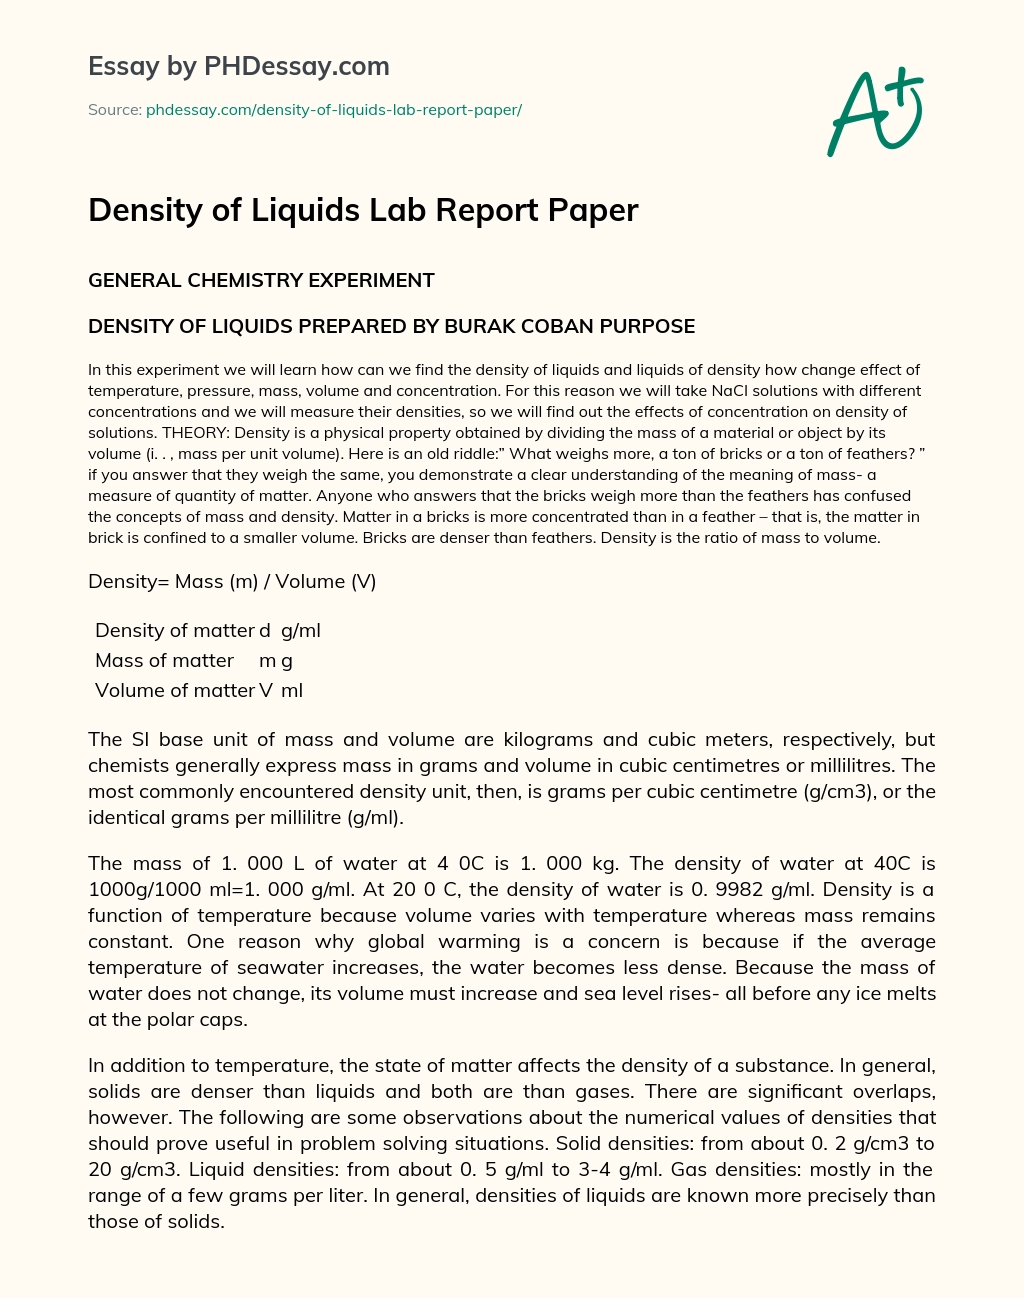 Density of Liquids Lab Report Paper essay